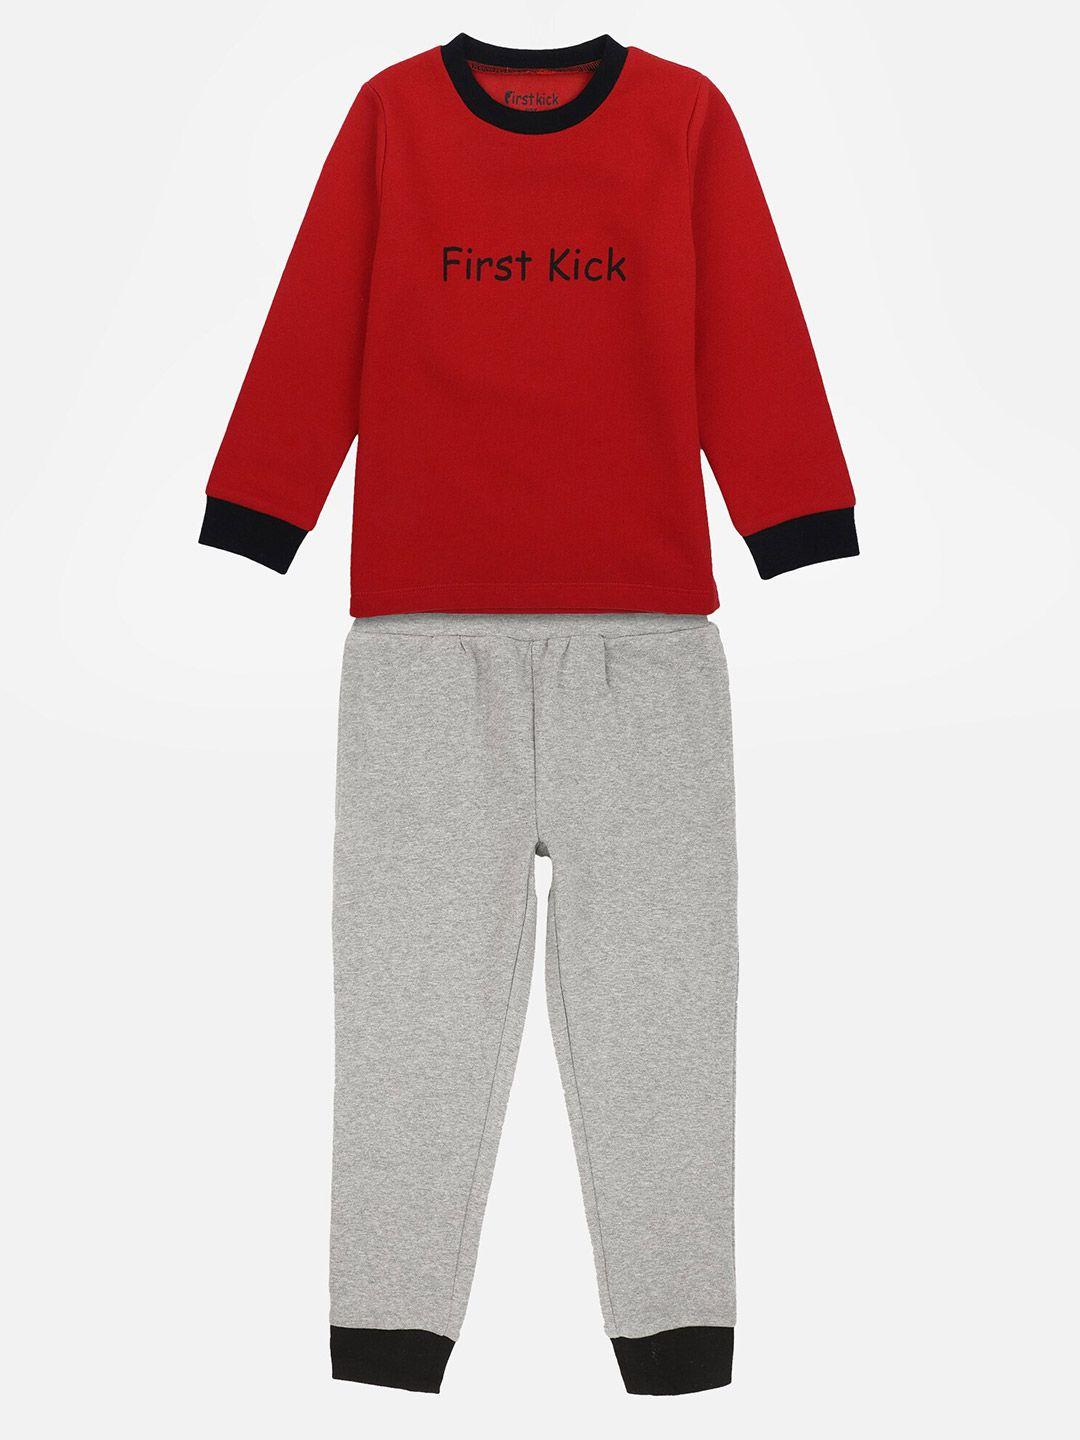 first kick boys red & grey printed t-shirt with pyjamas